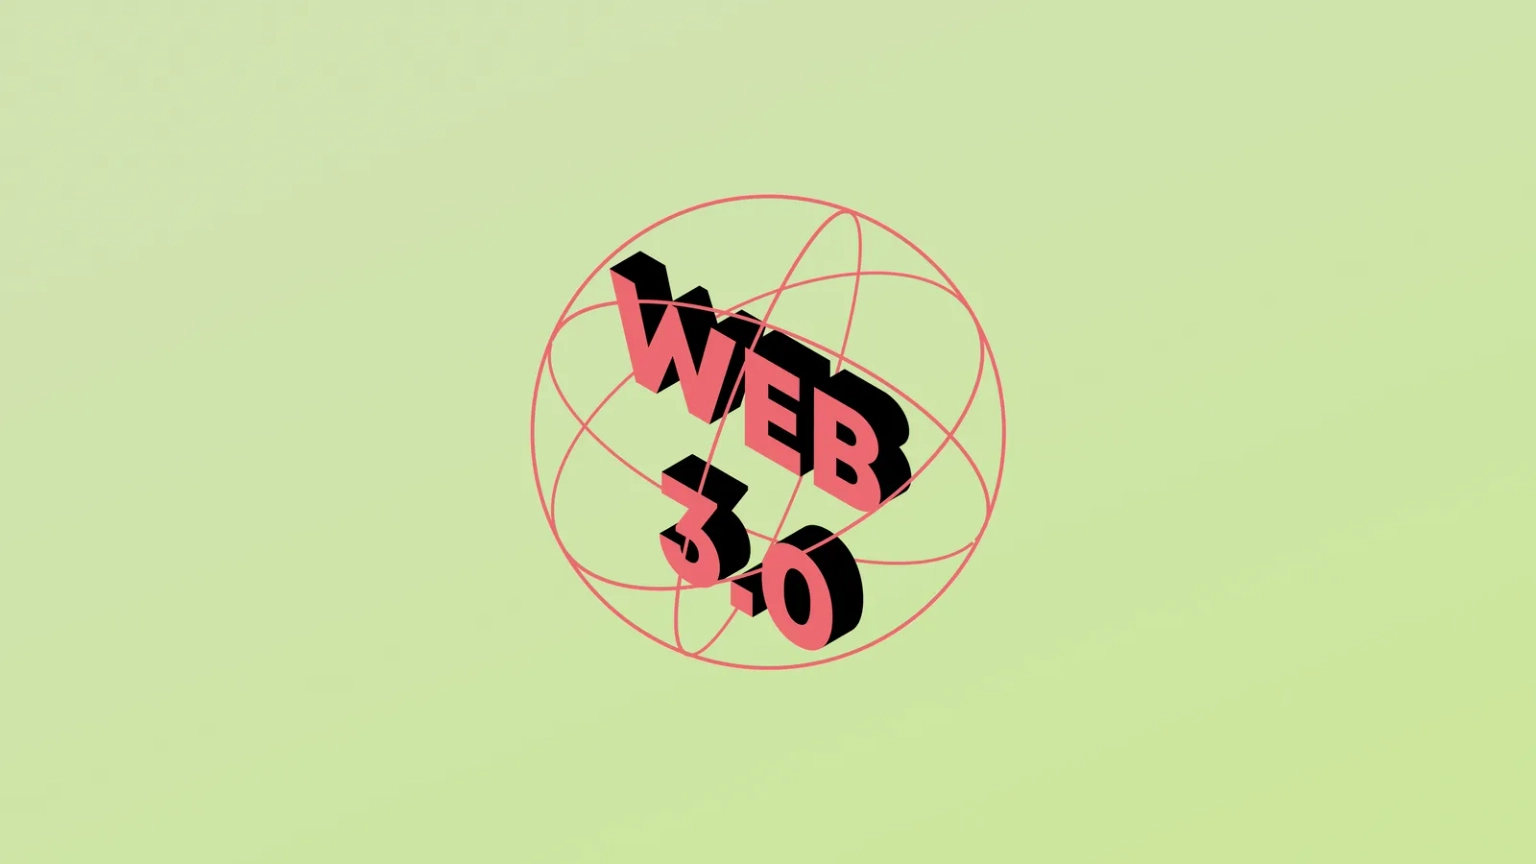 Web3 Protecting Community